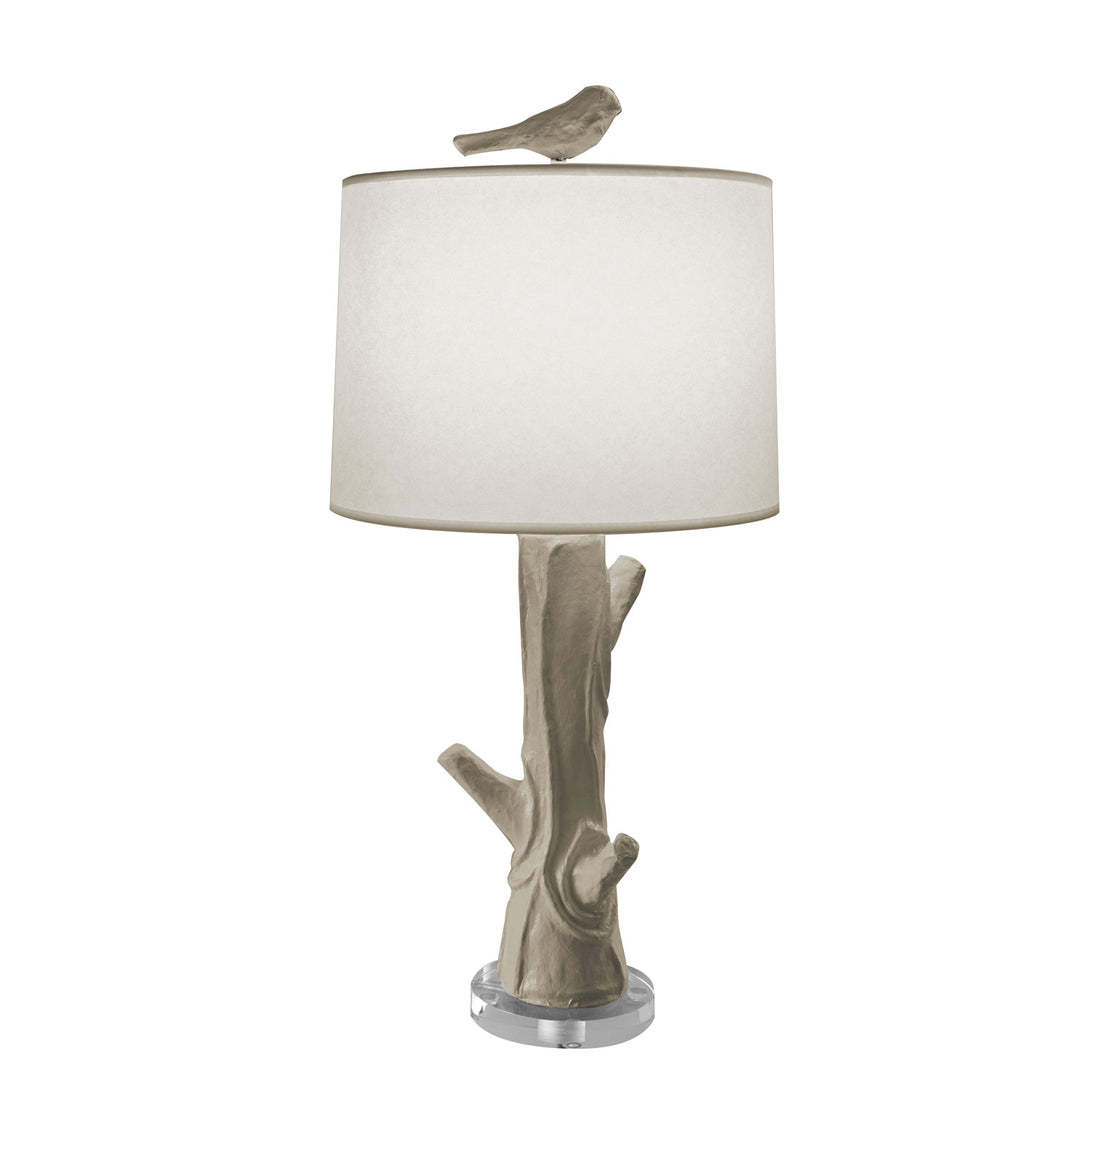 Gray papier mache Steph Wood lamp with bird finial. Faux bois.